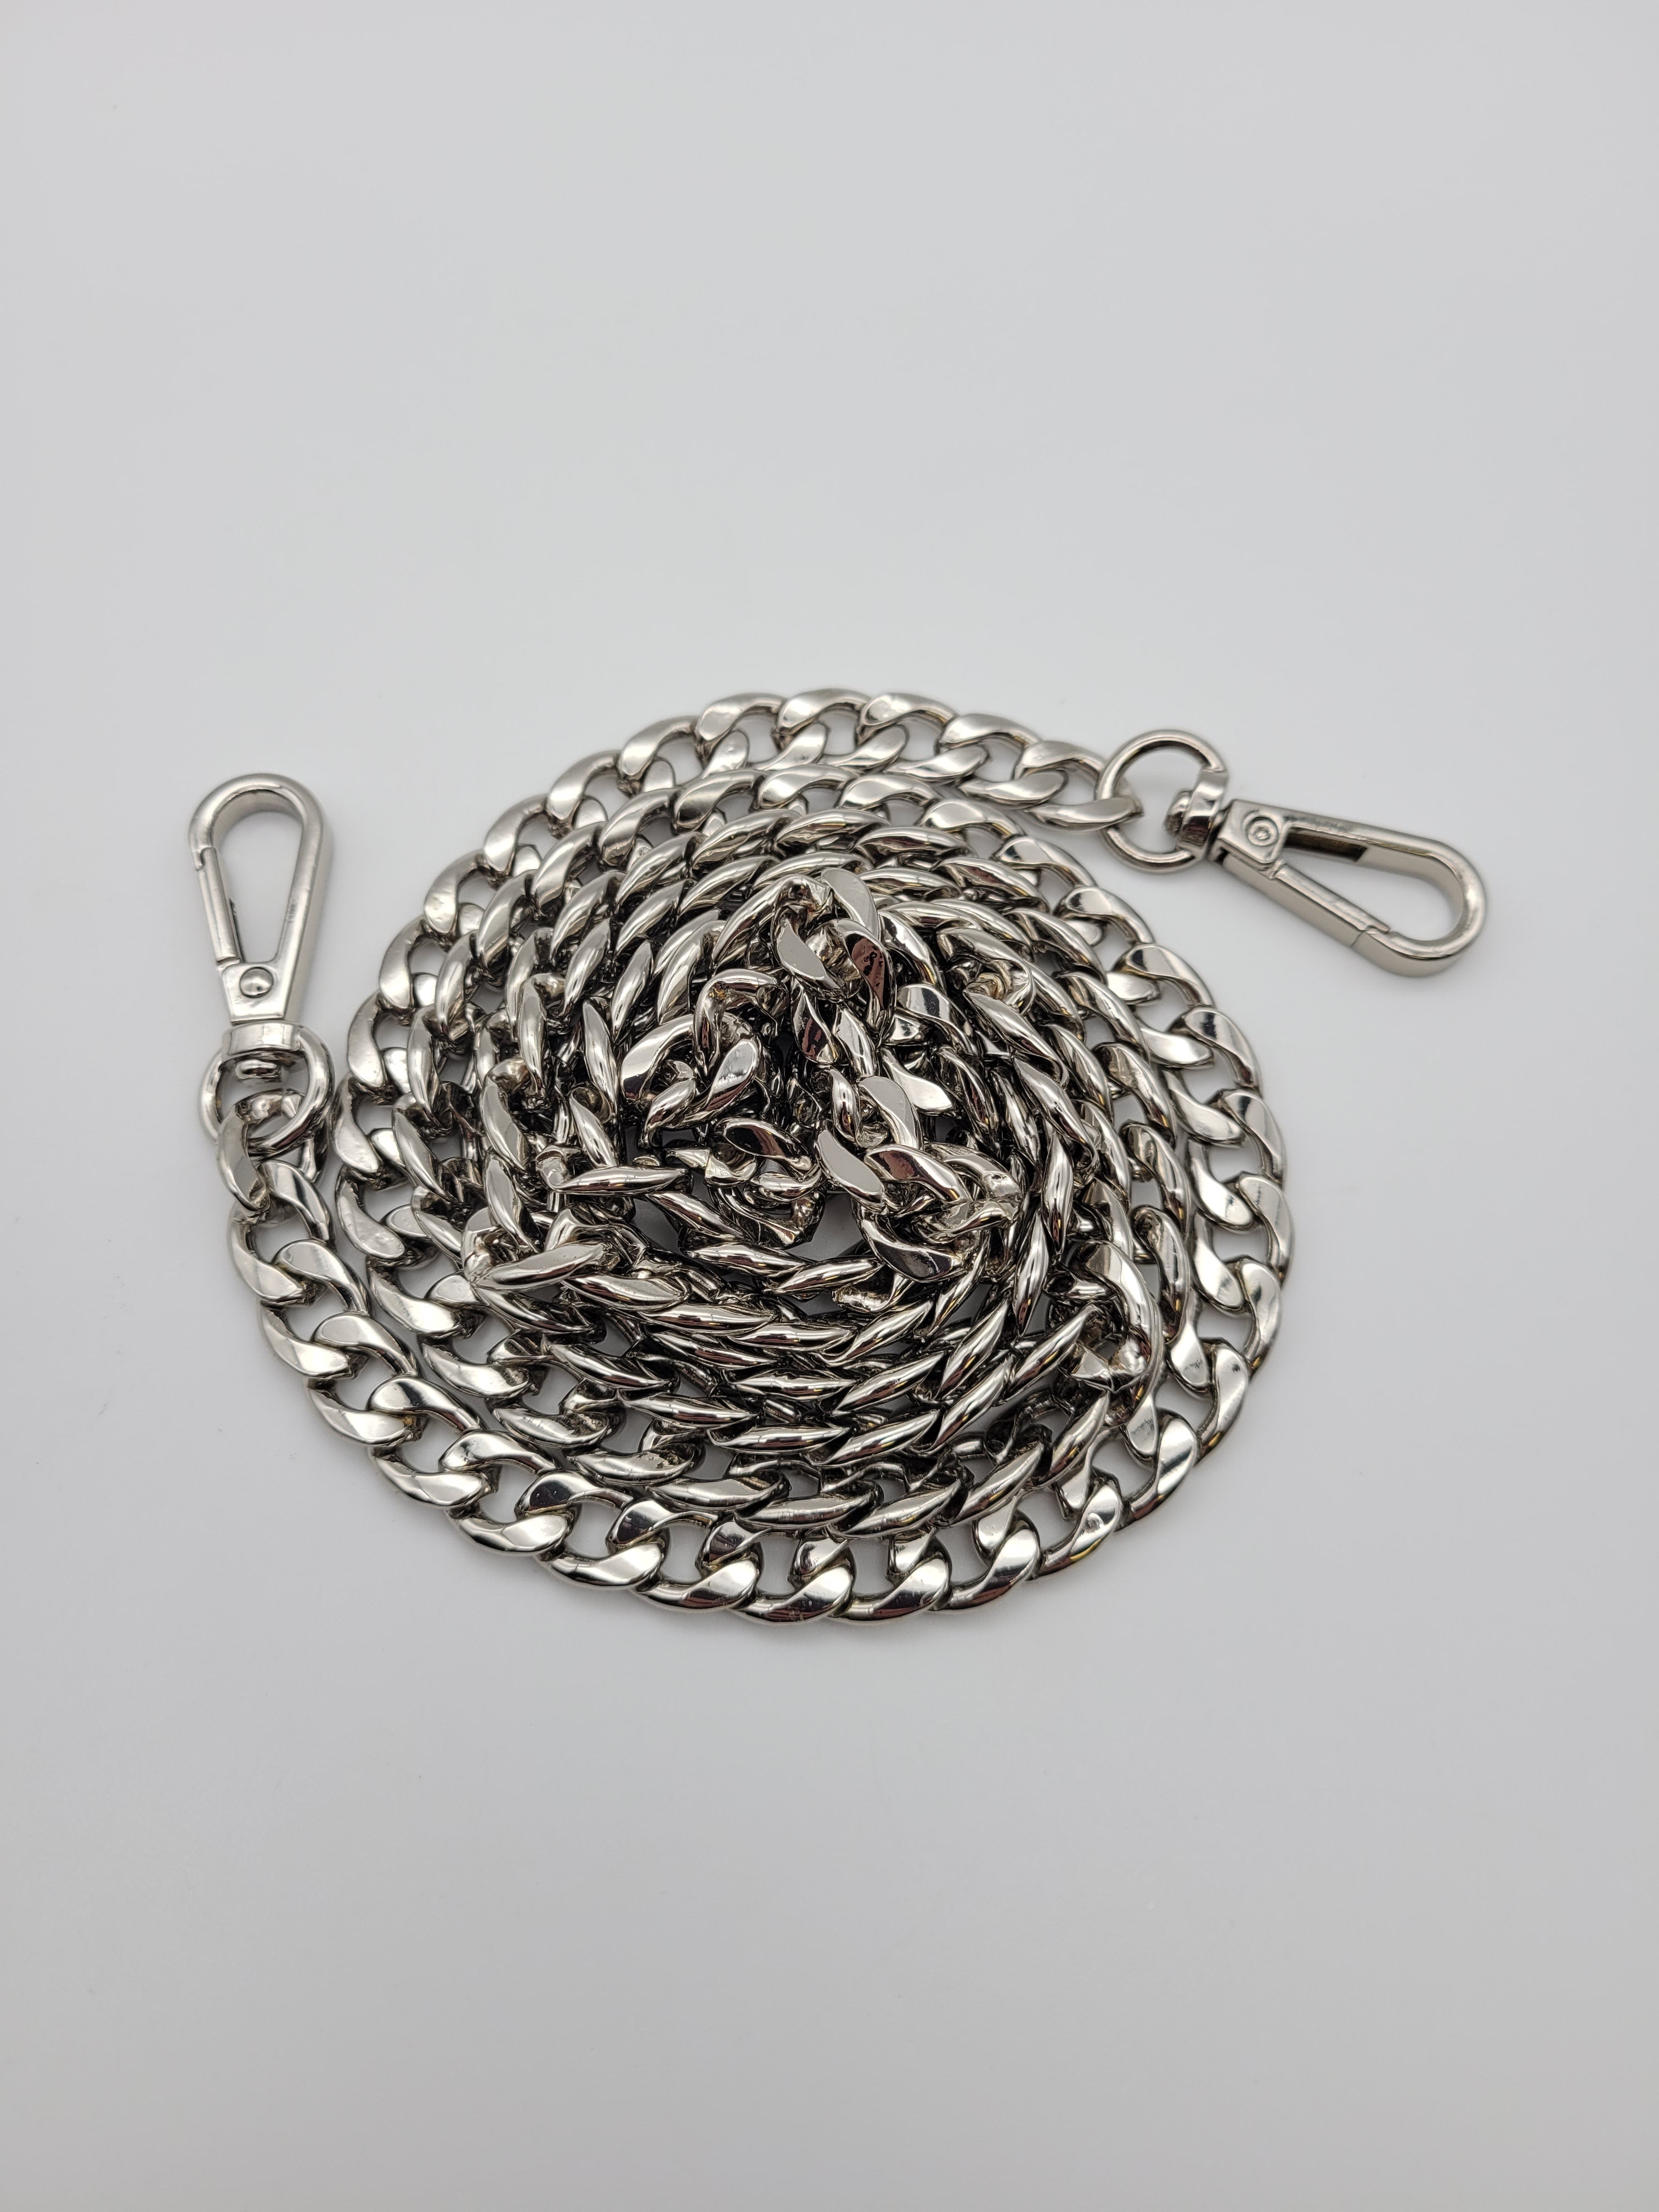 Indo Love Kreation Metal Purse Chain Strap 46 Long Silver